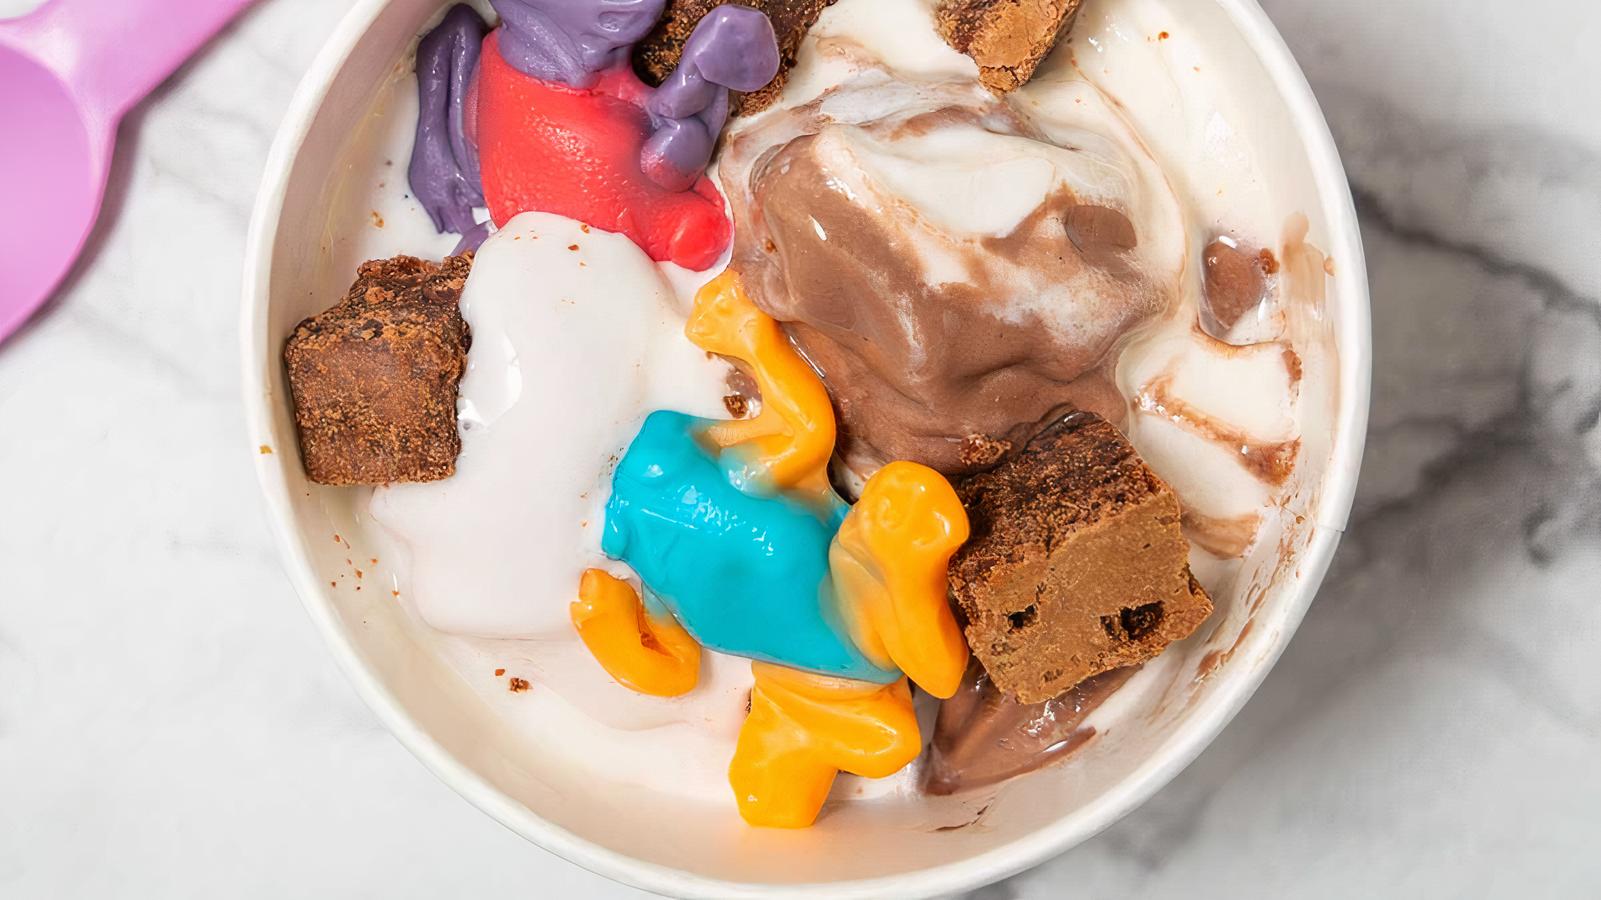 Kellogg's® Froot Loops Frozen Yogurt - Yogurty's® Froyo® Frozen